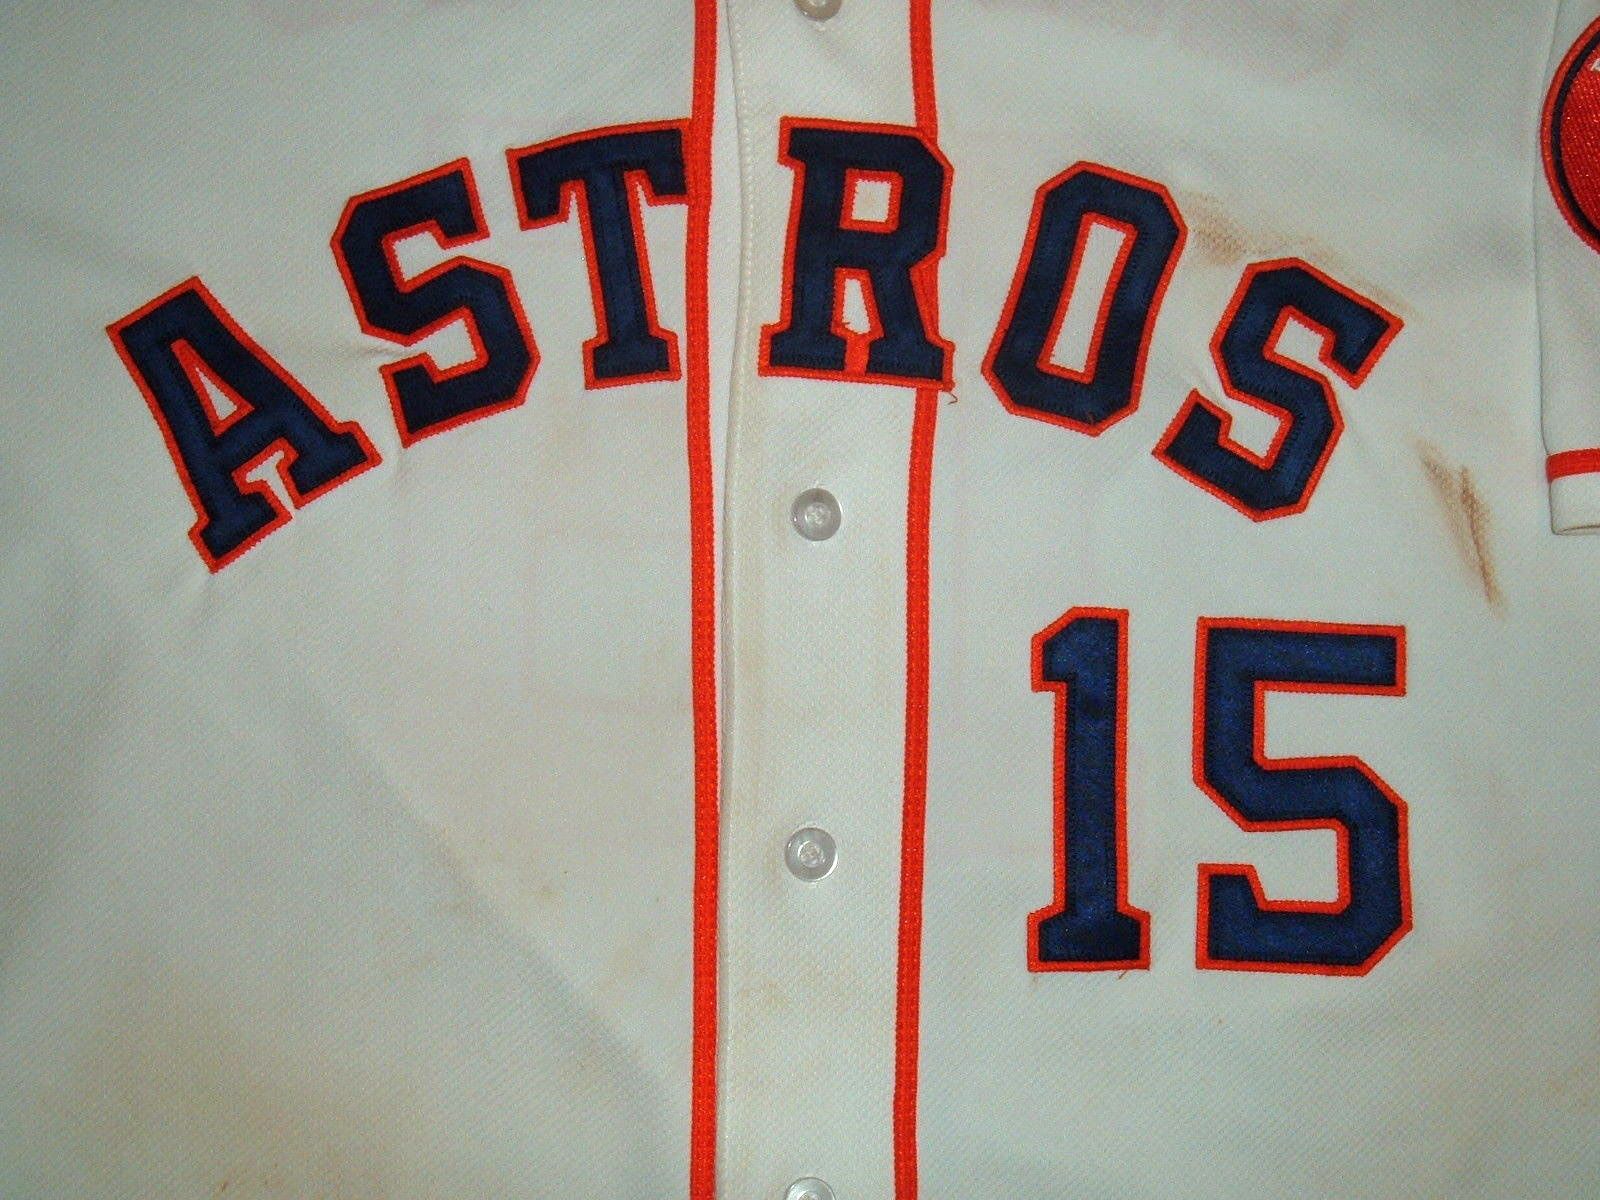 1960s astros jersey